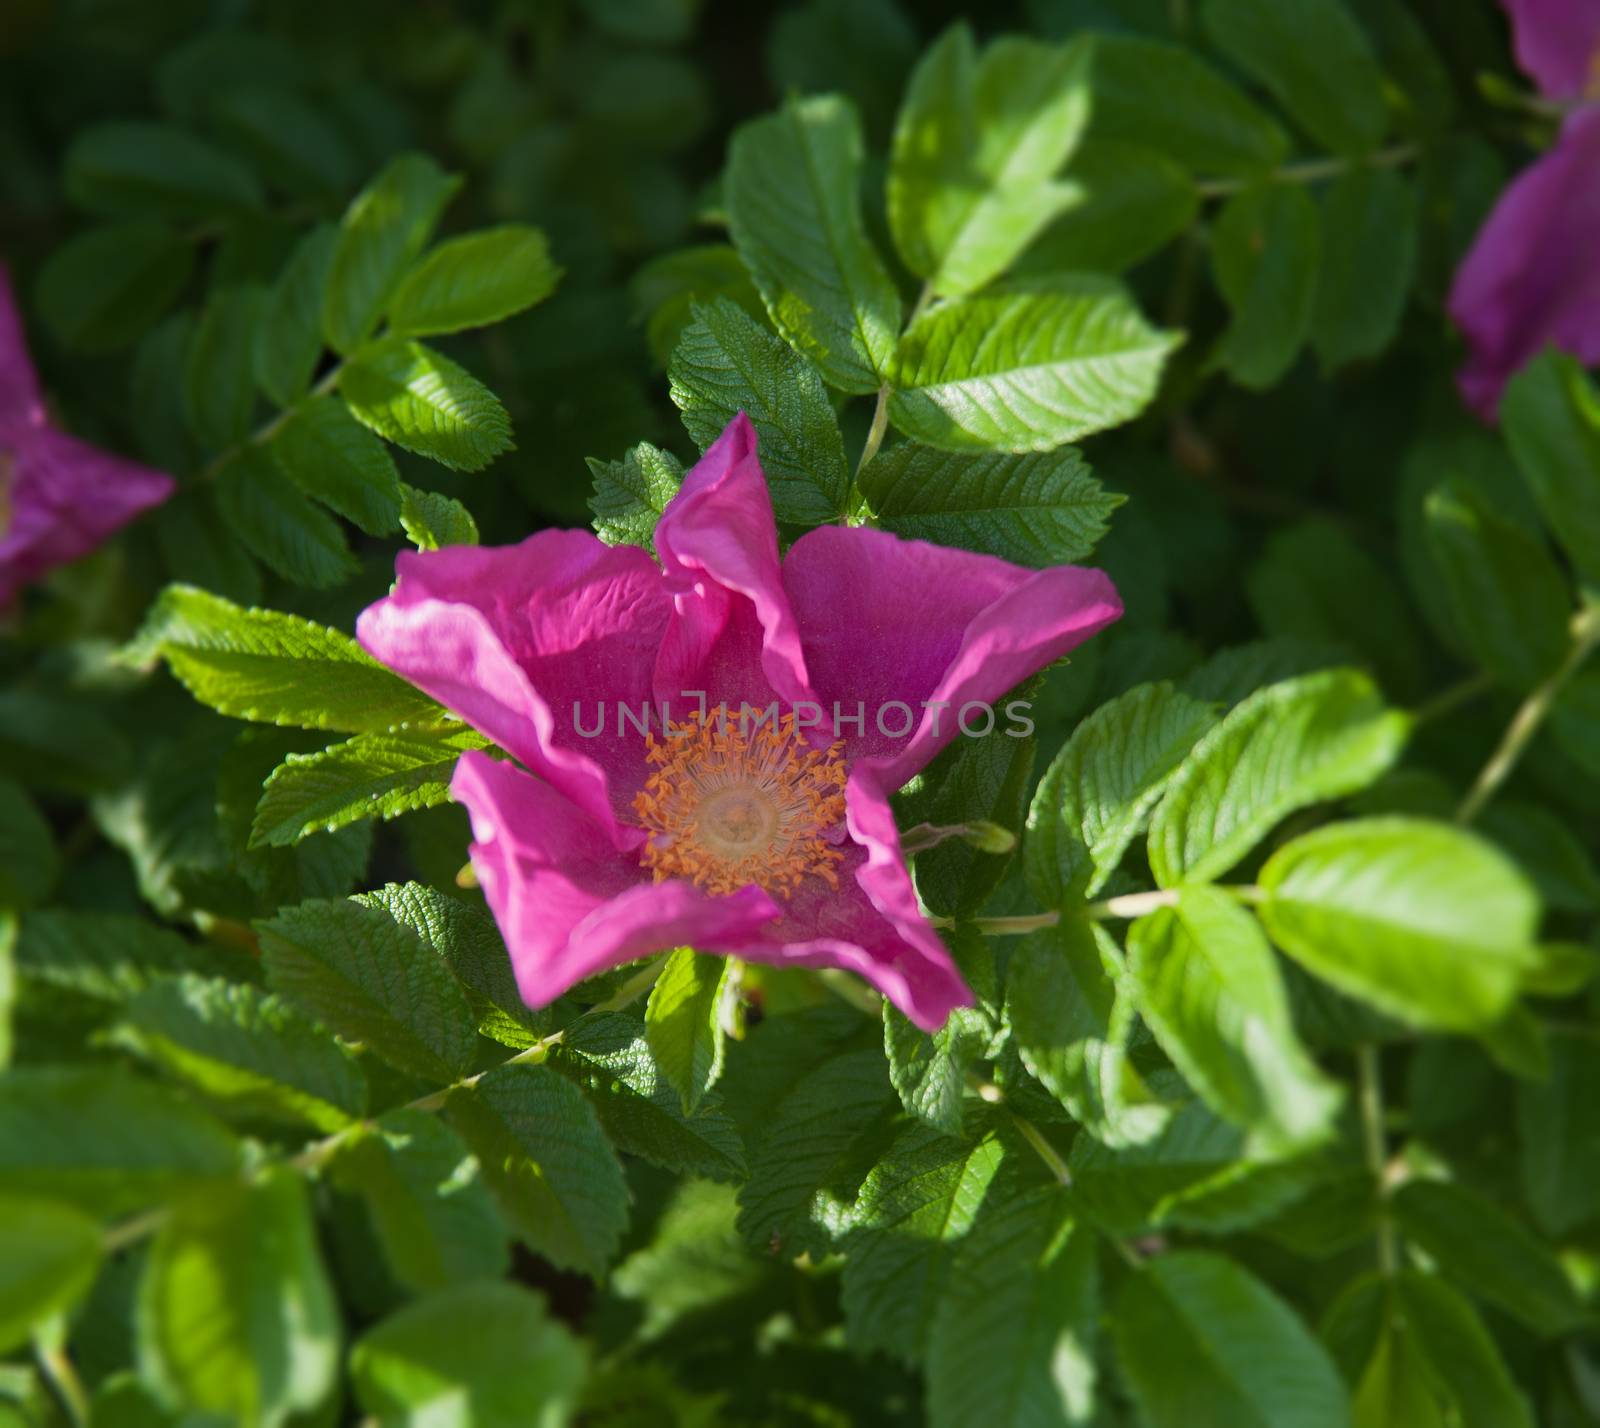 Flowers of dog-rose by raduga21